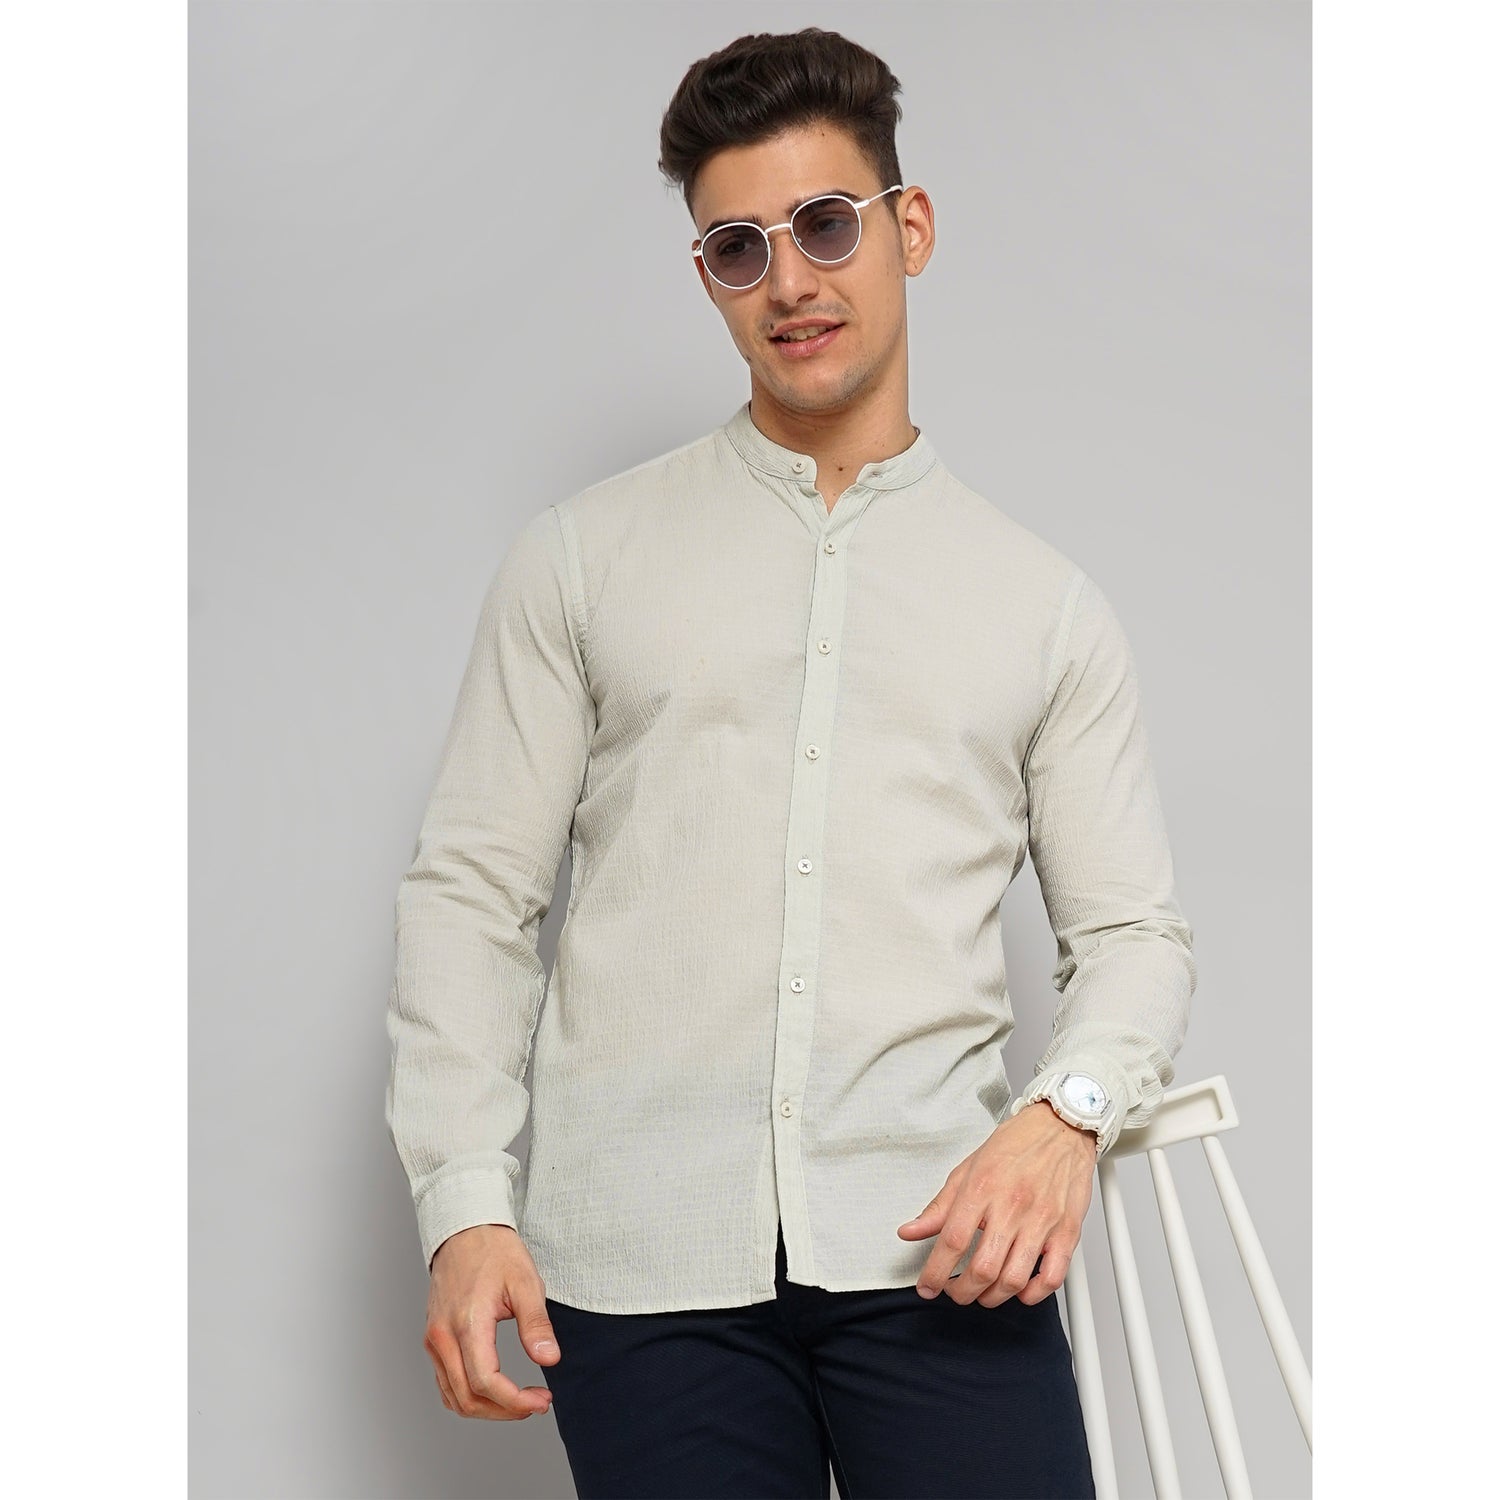 Offwhite Cotton Blend Shirt